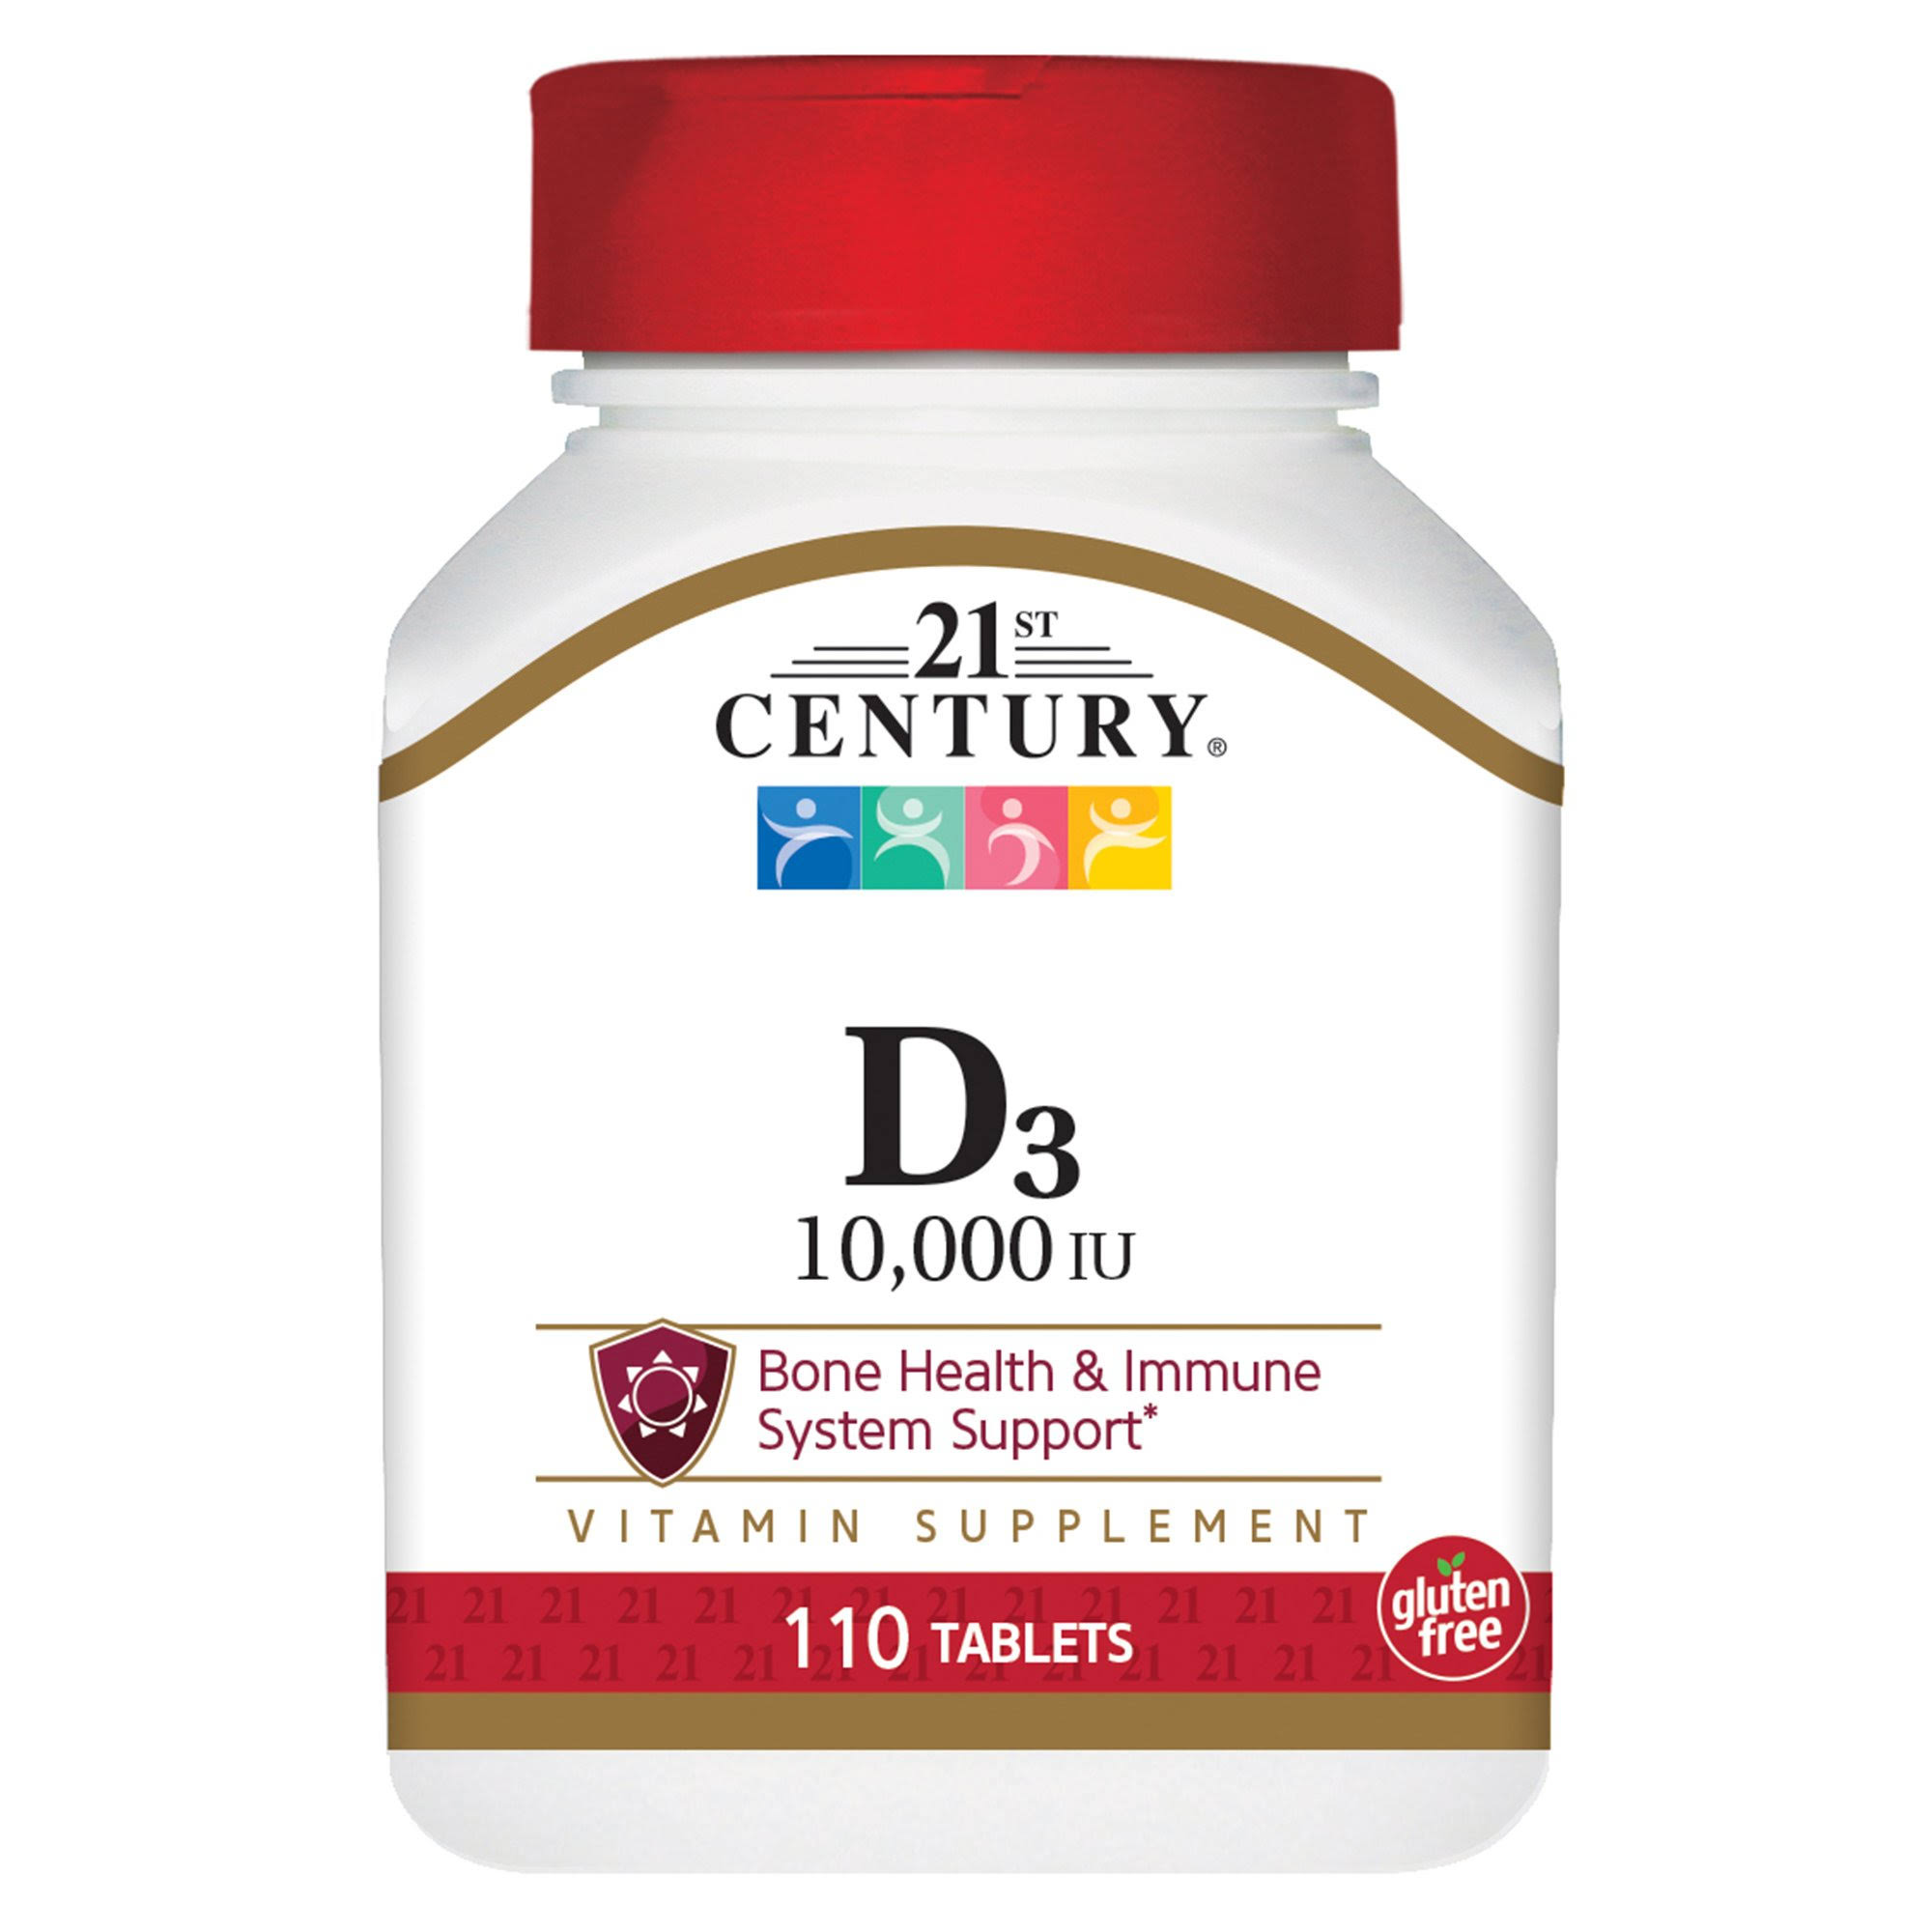 21st Century Ultra Strength D3 10 000 IU Vitamin Supplement - 110ct